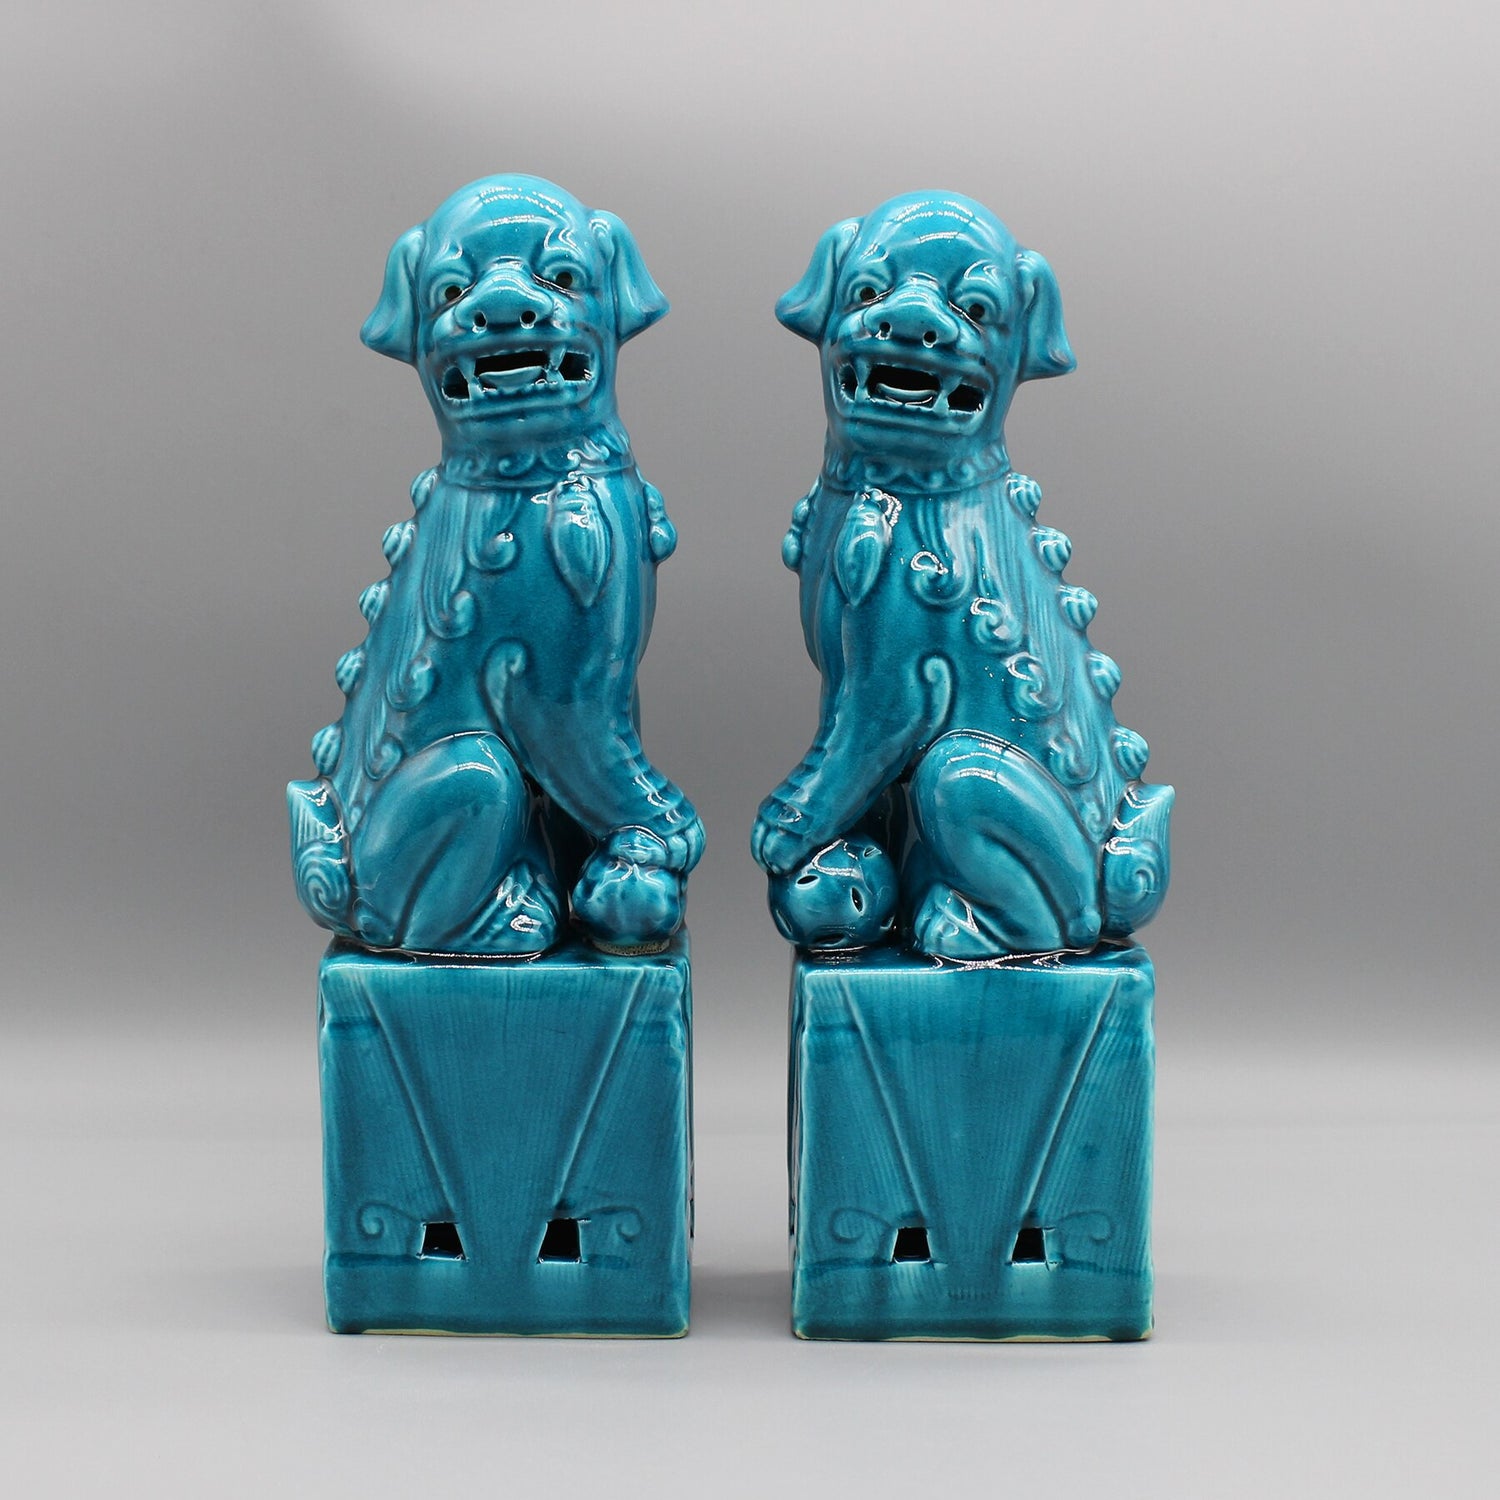 Pair of Foo Dogs, ceramic scultpure